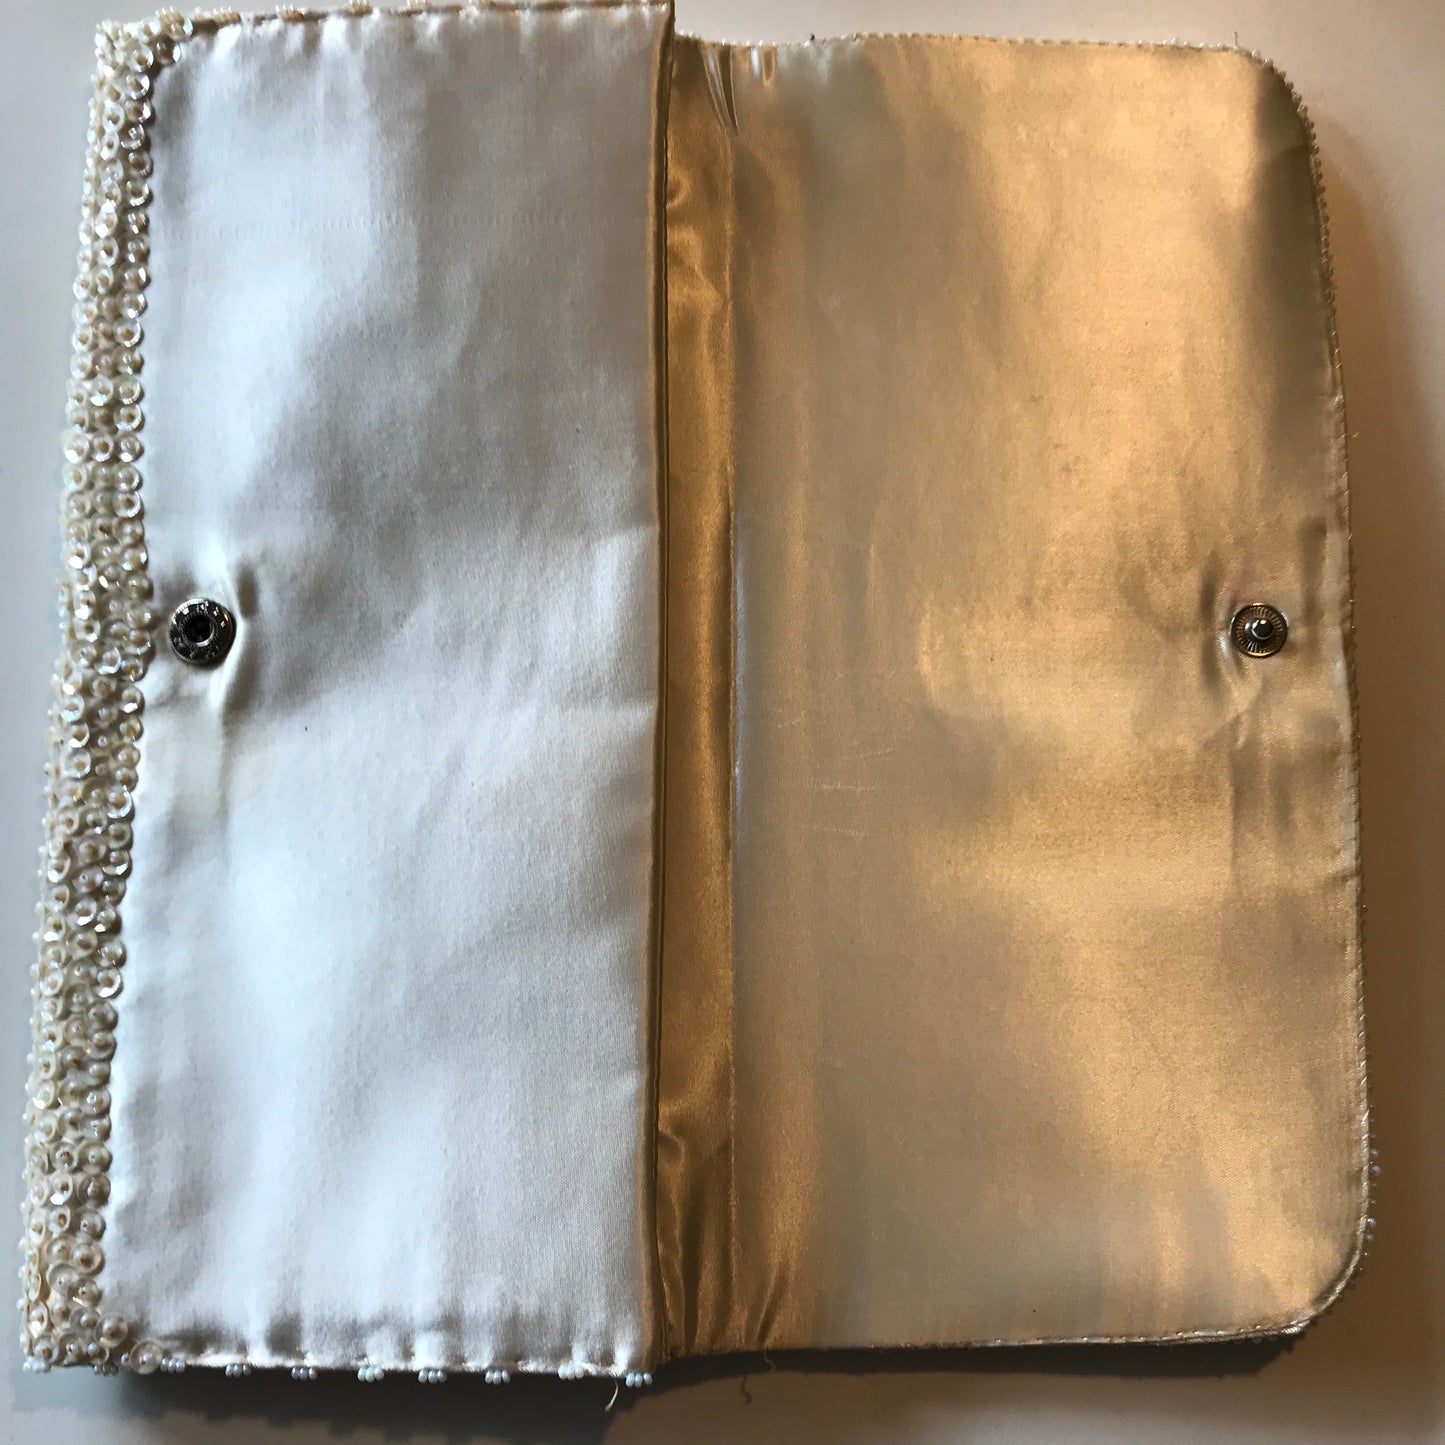 Sparkling Off-White Satin Beaded Envelope Style Clutch Handbag circa 1960s